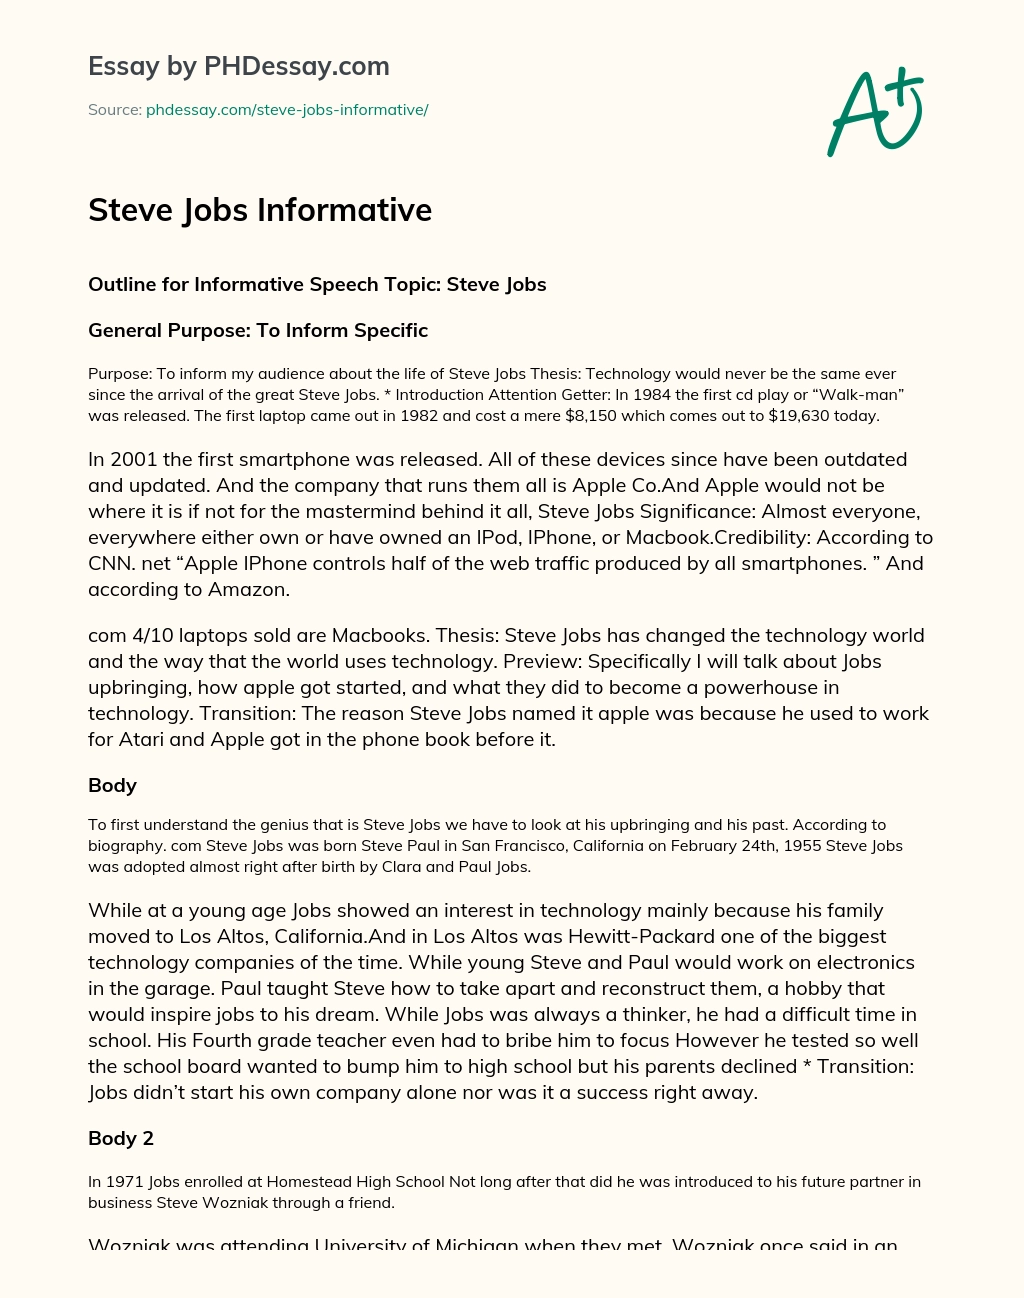 Steve Jobs Informative essay